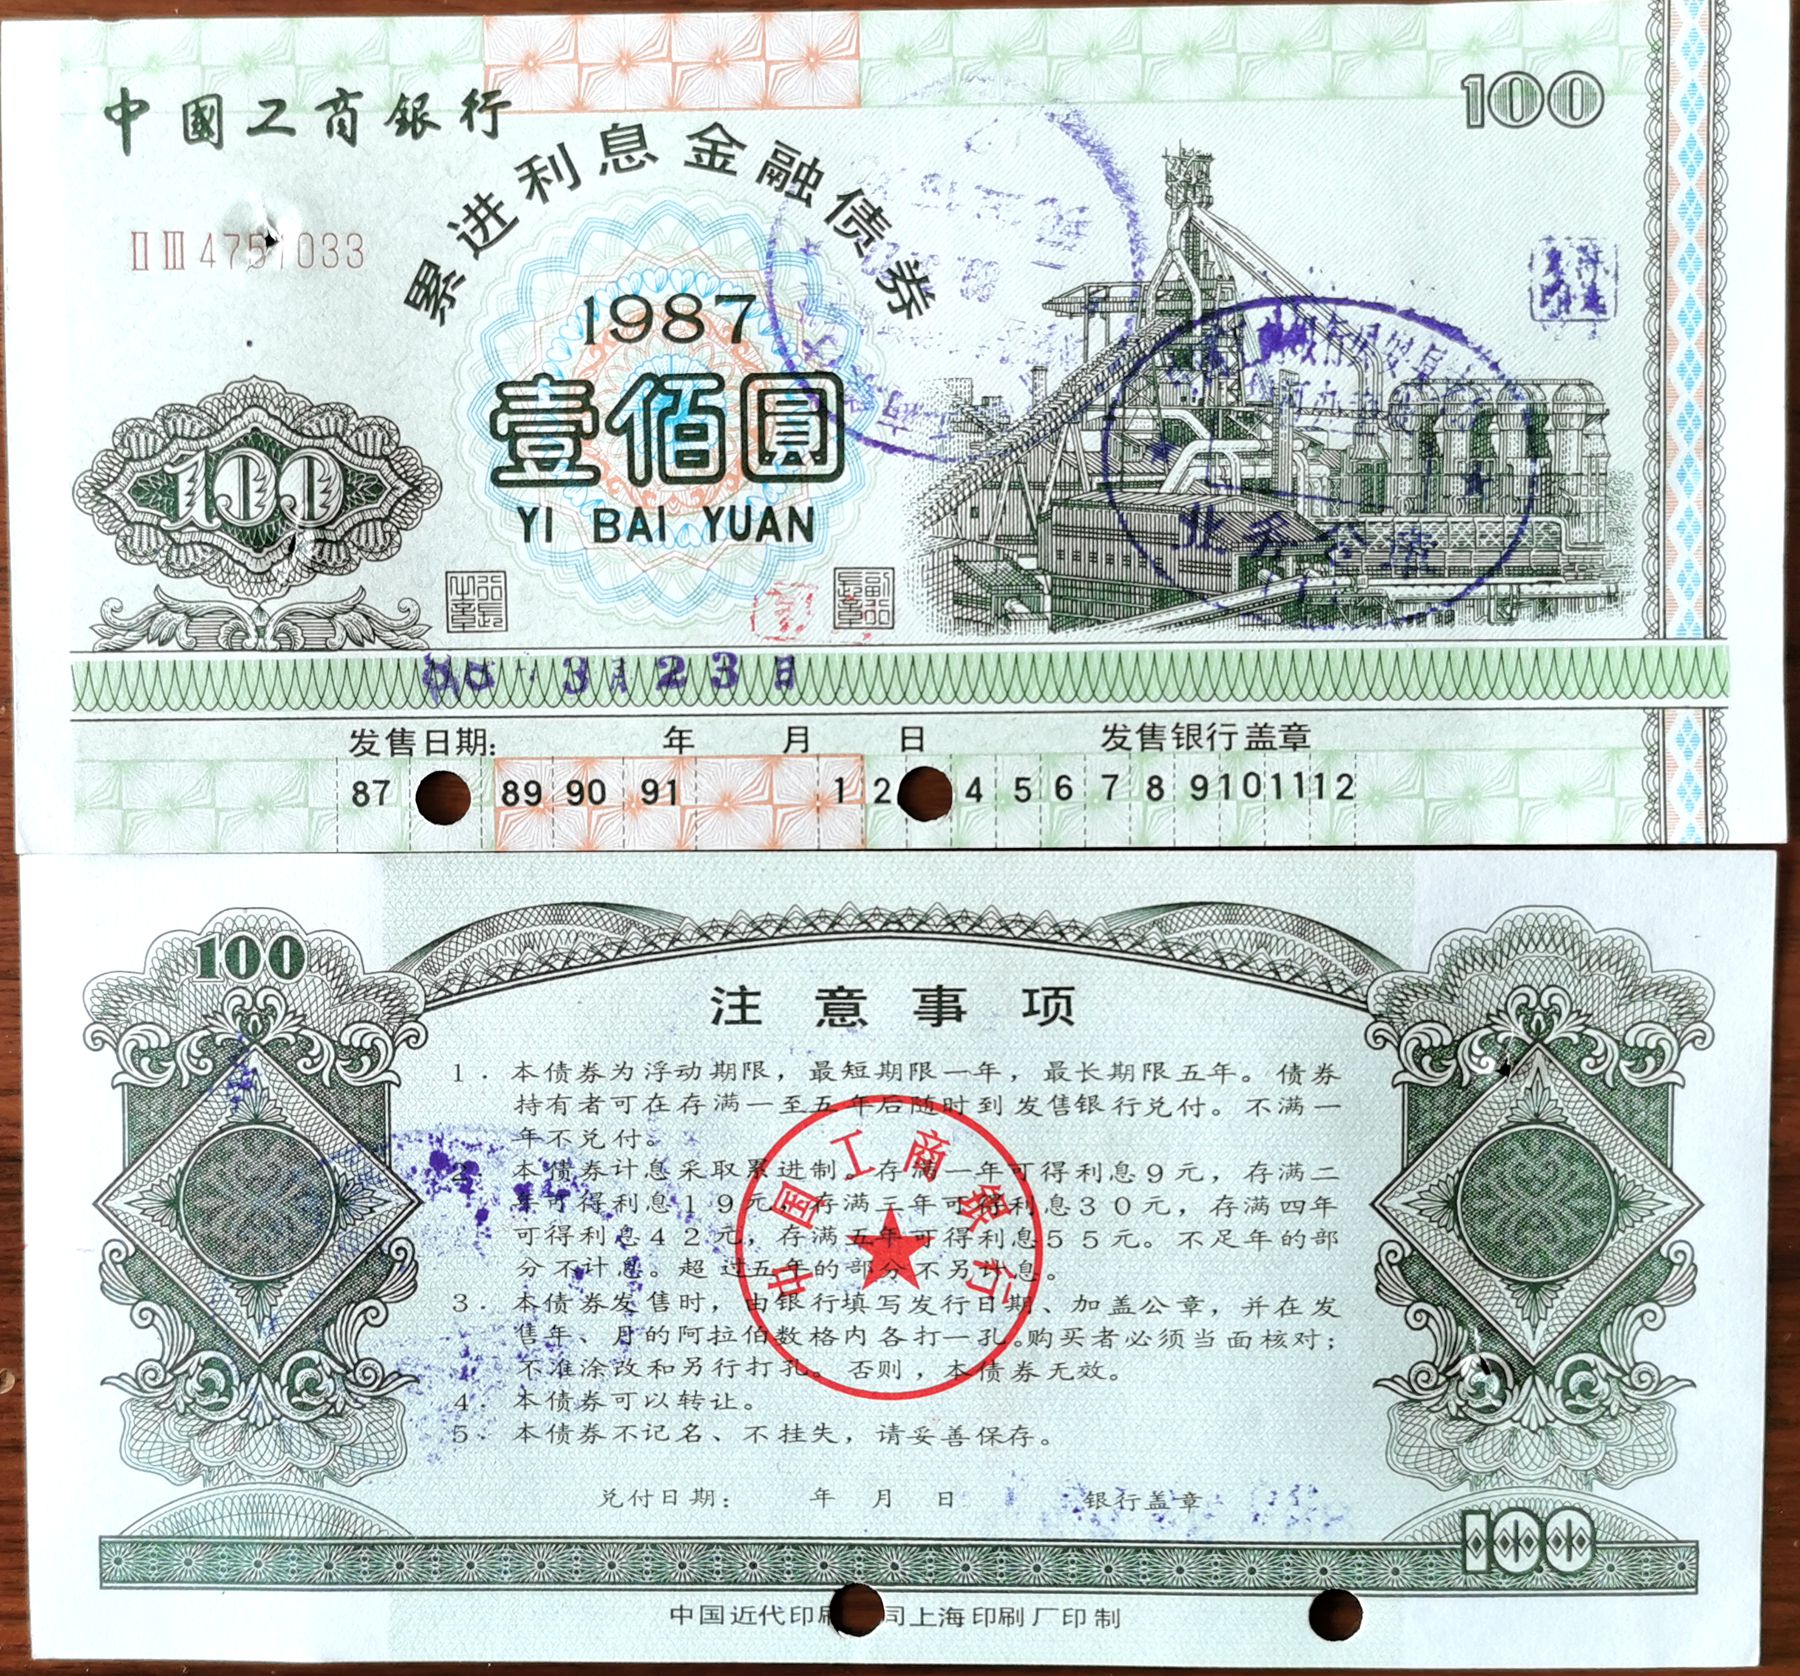 B7372, ICBC Bank of China, 10.5%, 5 Years Finance Bond 100 Yuan, 1987